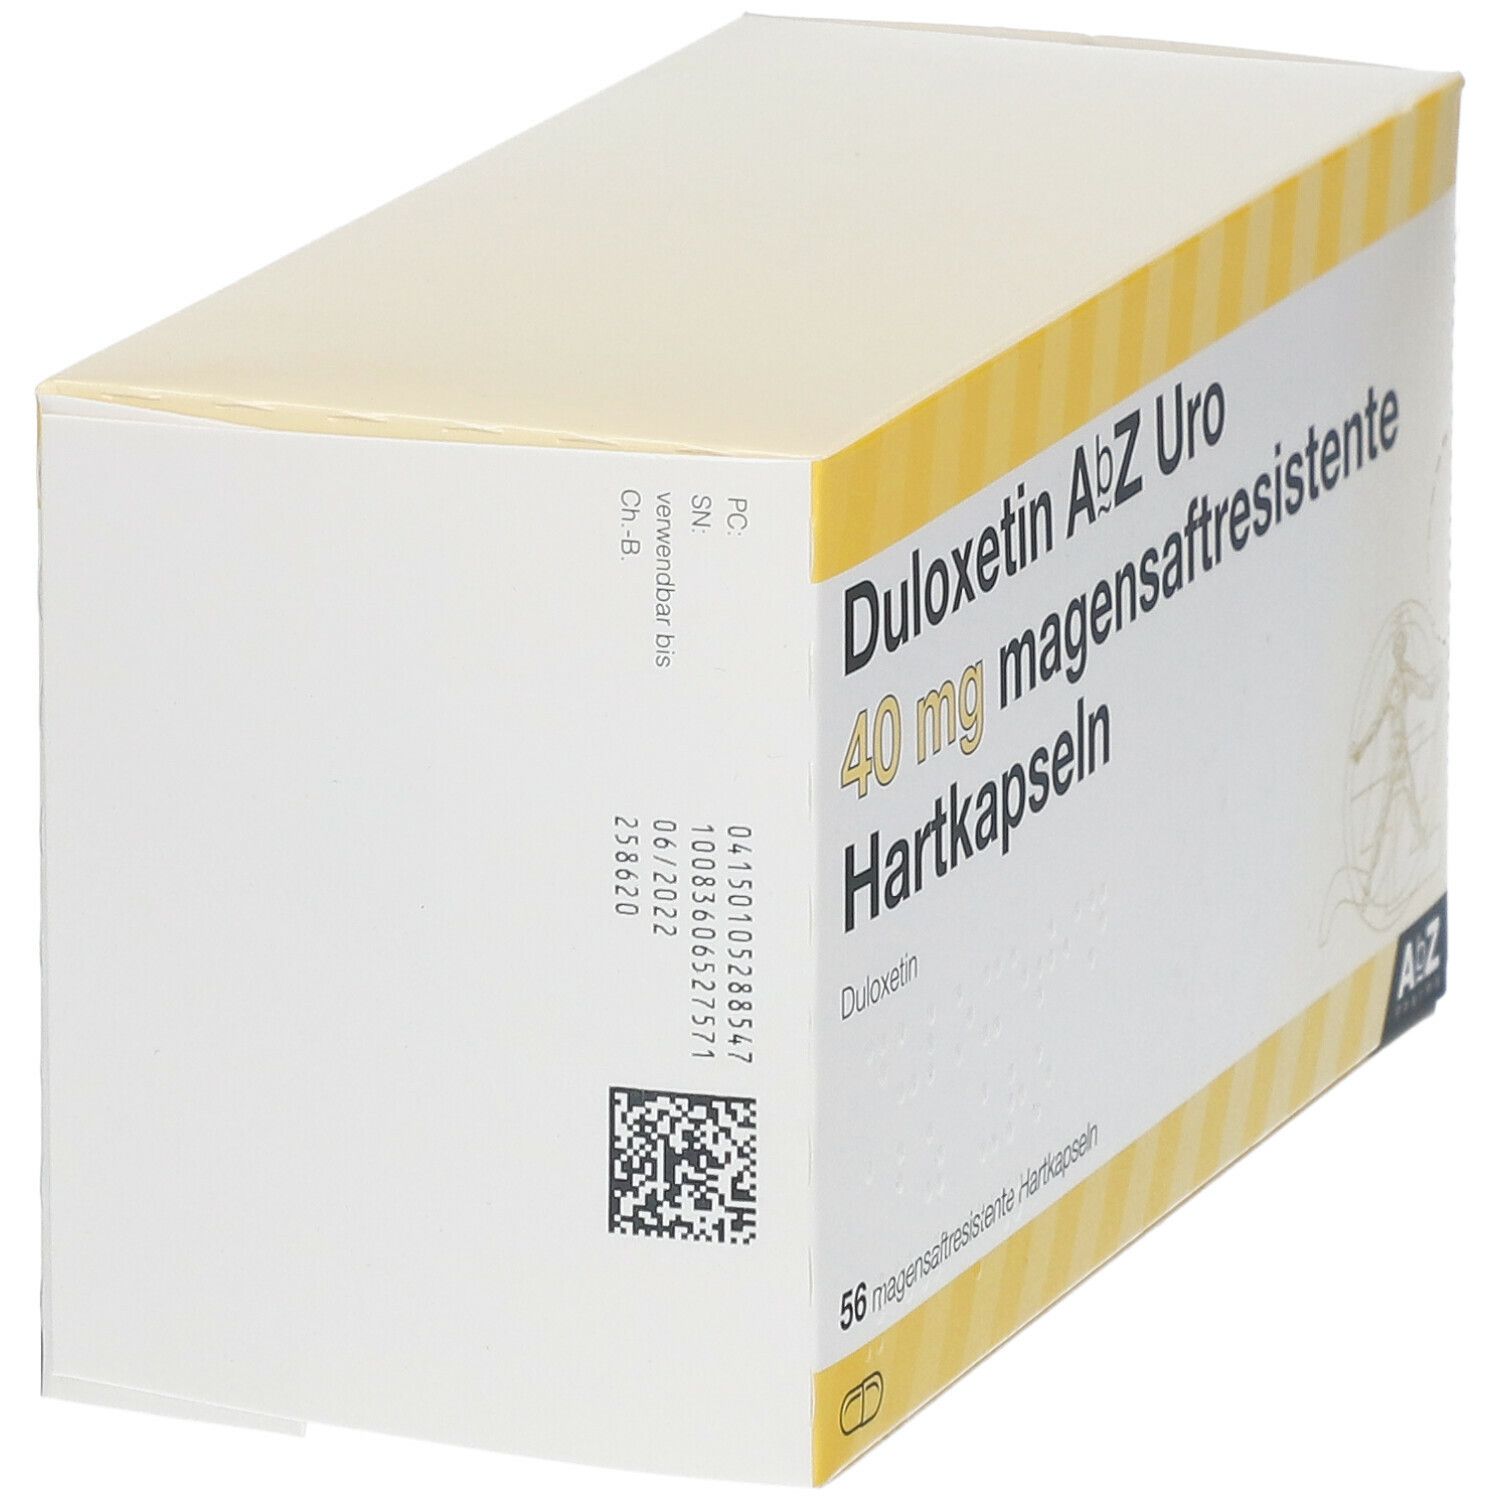 Duloxetin AbZ Uro 40 mg